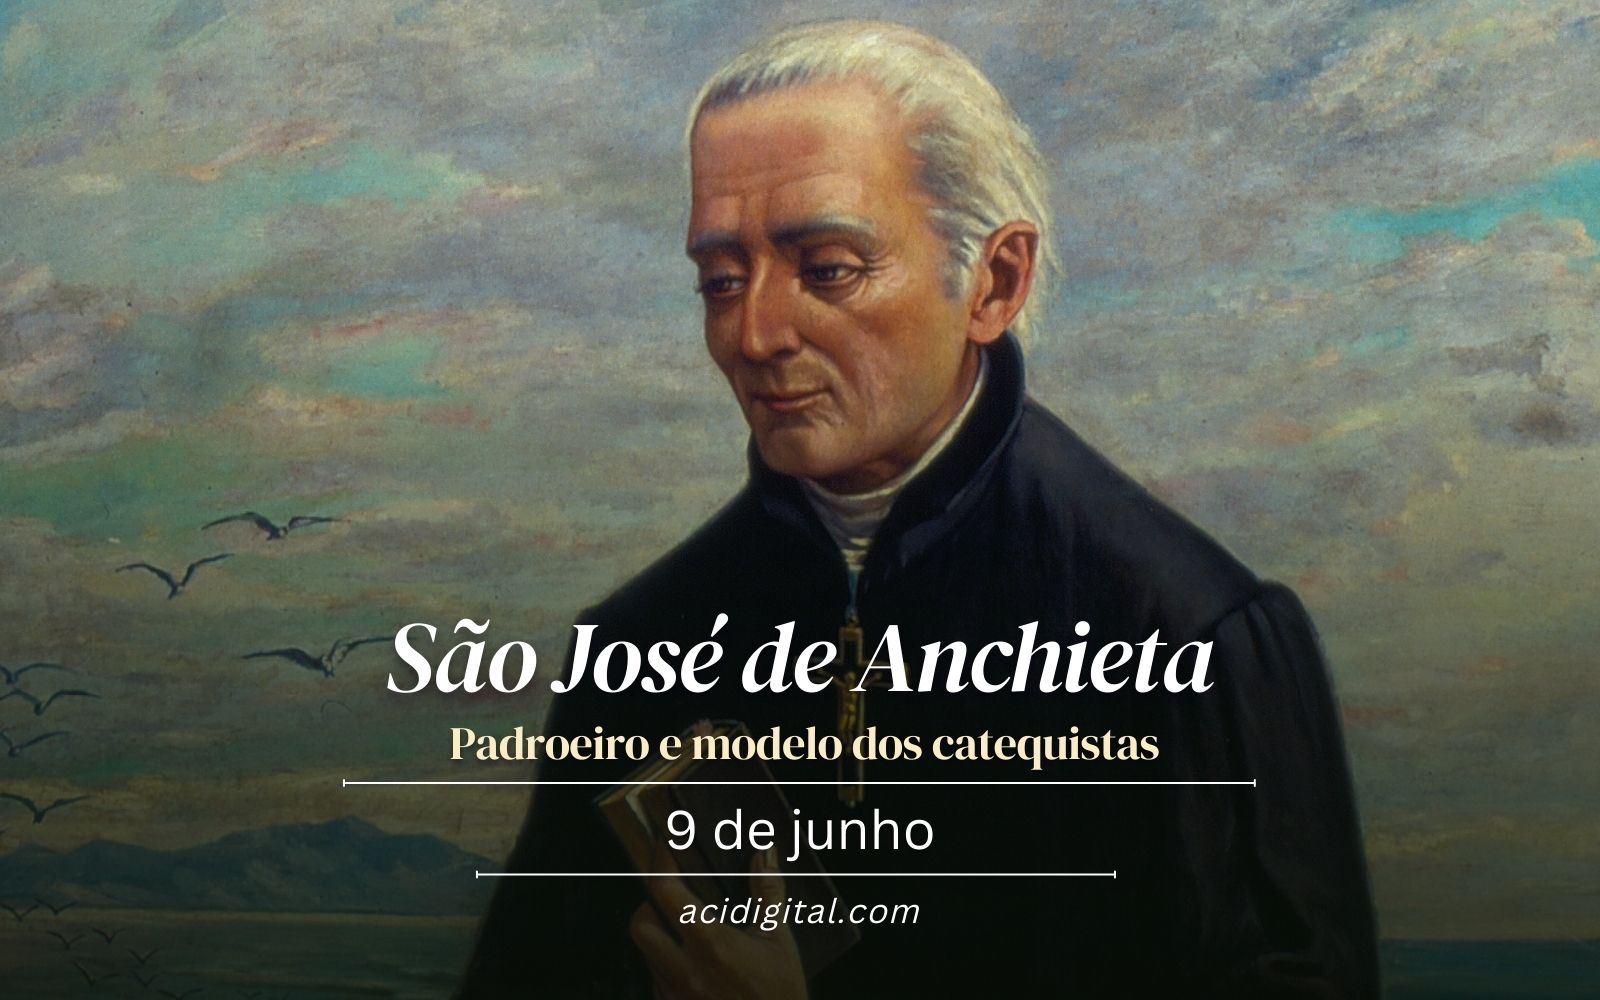 Hoje é celebrado são José de Anchieta, o apóstolo do Brasil